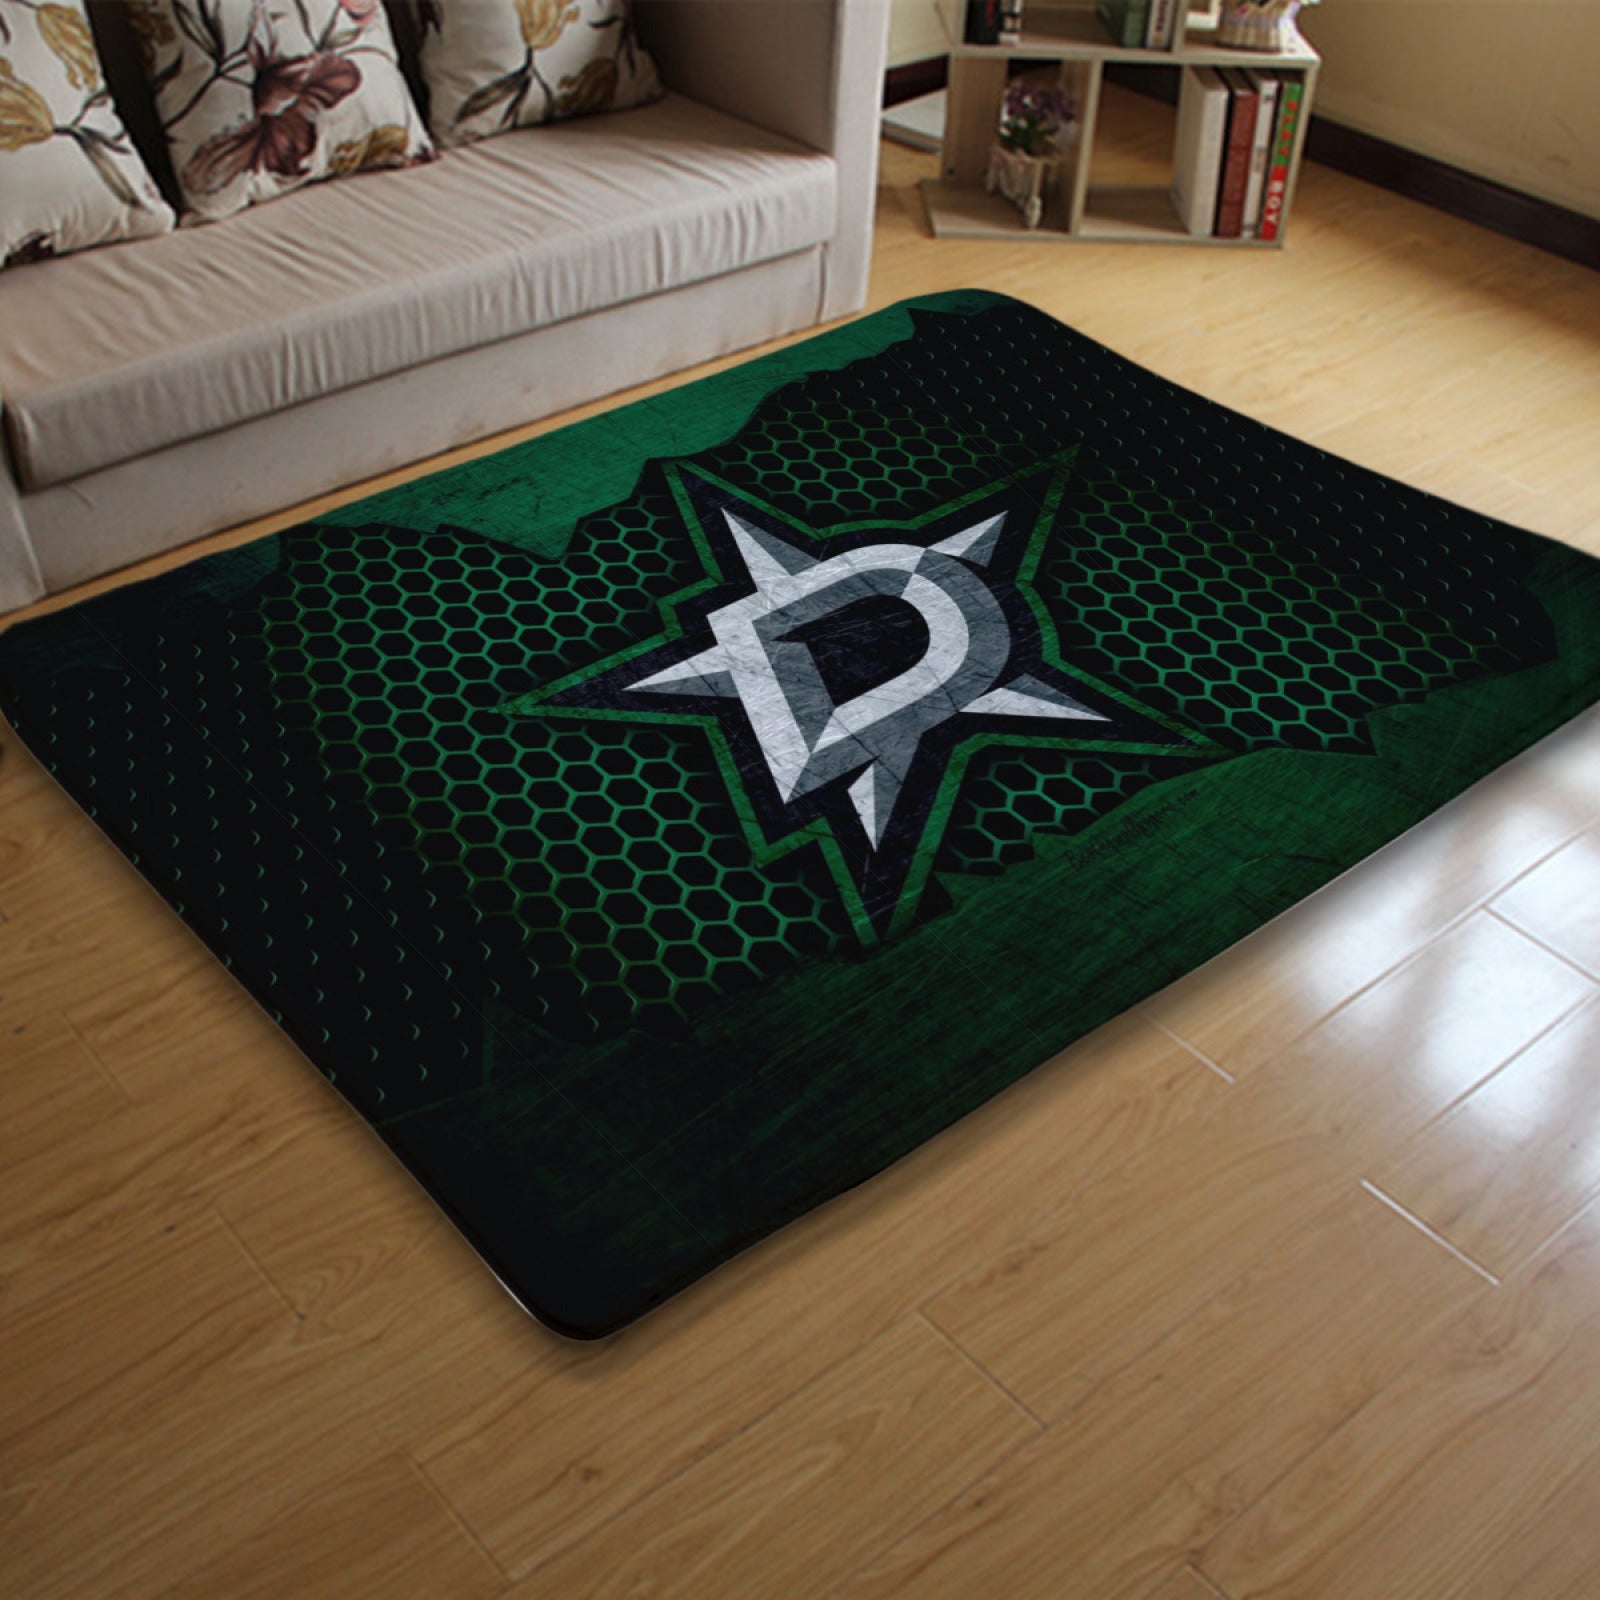 Dallas Stars Hockey League Carpet Living Room Bedroom Mats Kitchen Bathroom Rugs